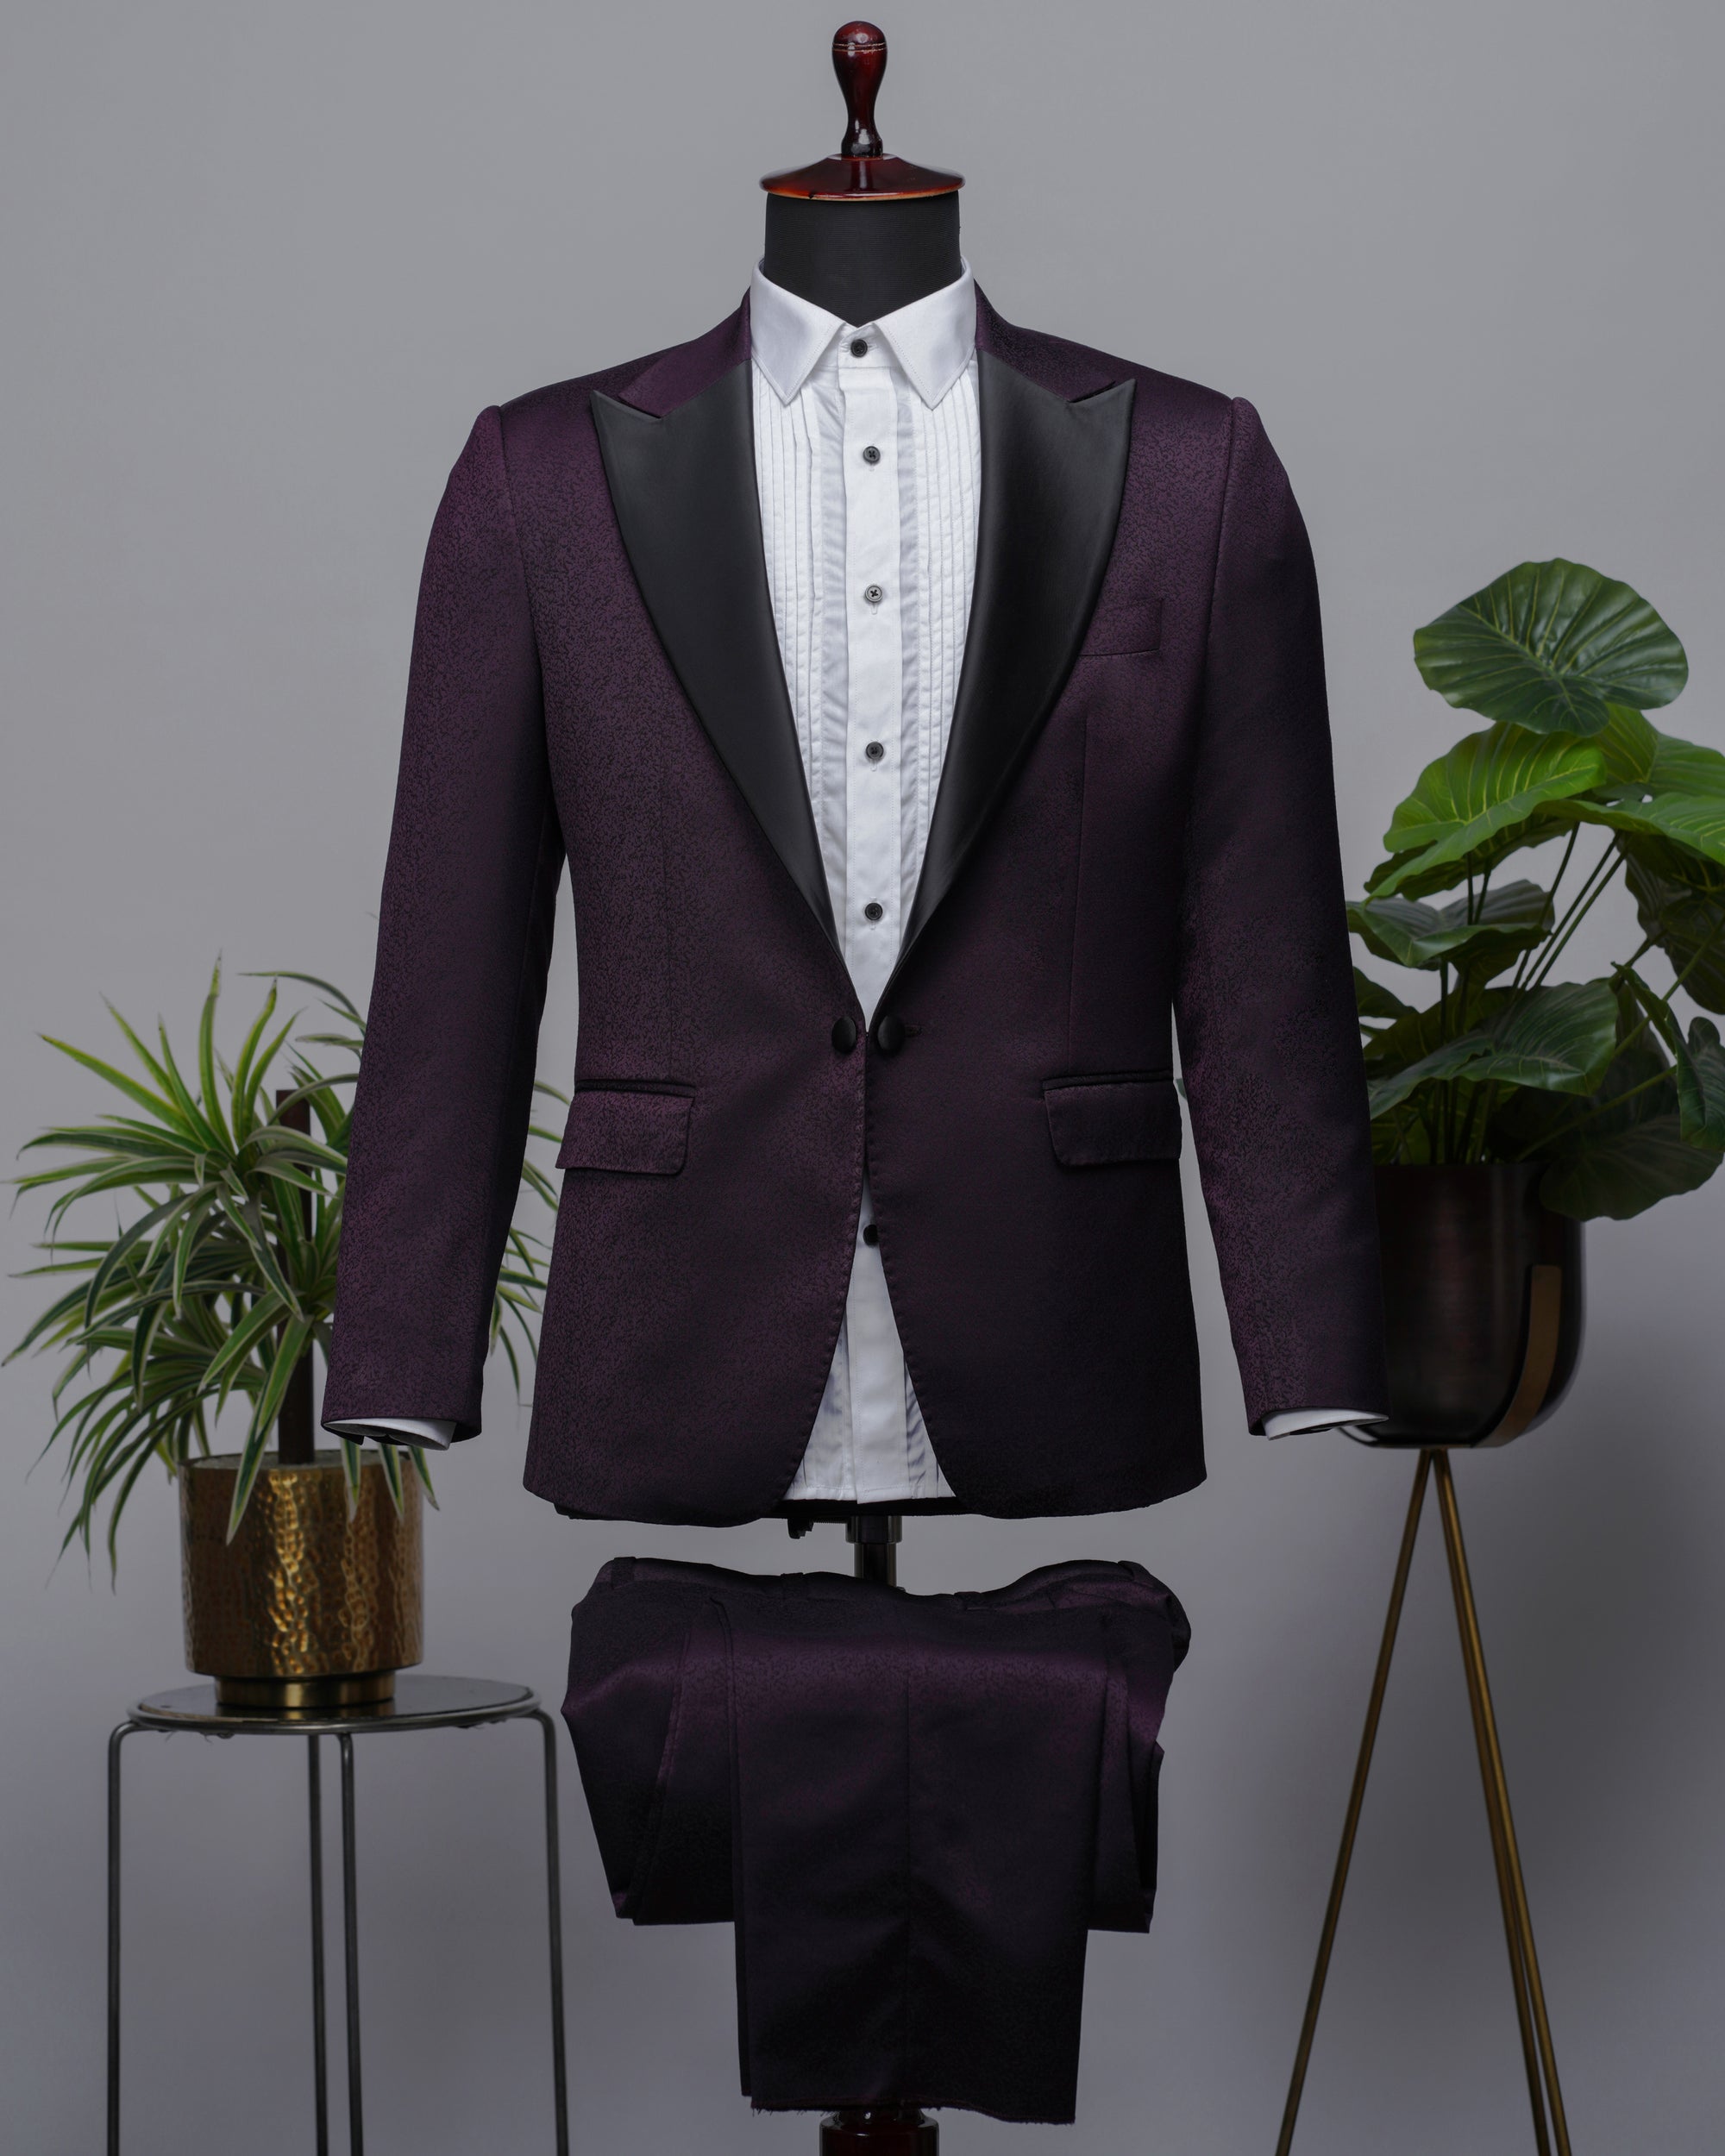 Maroon Jacquard Tuxedo Suit